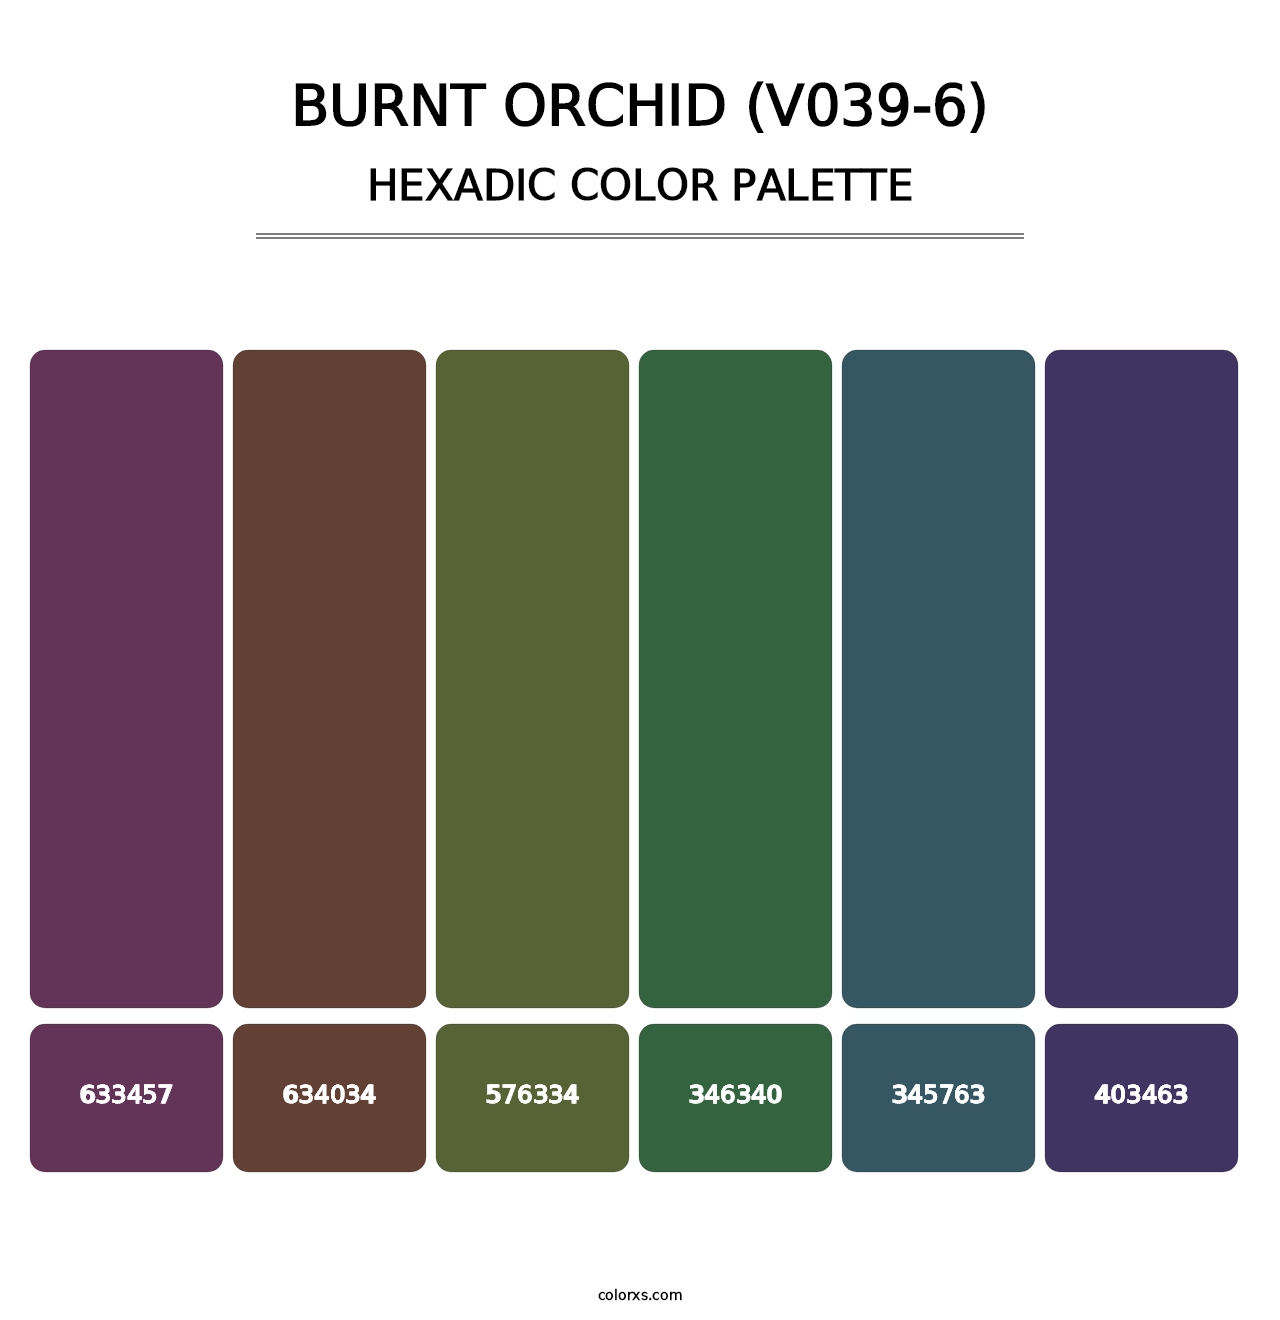 Burnt Orchid (V039-6) - Hexadic Color Palette